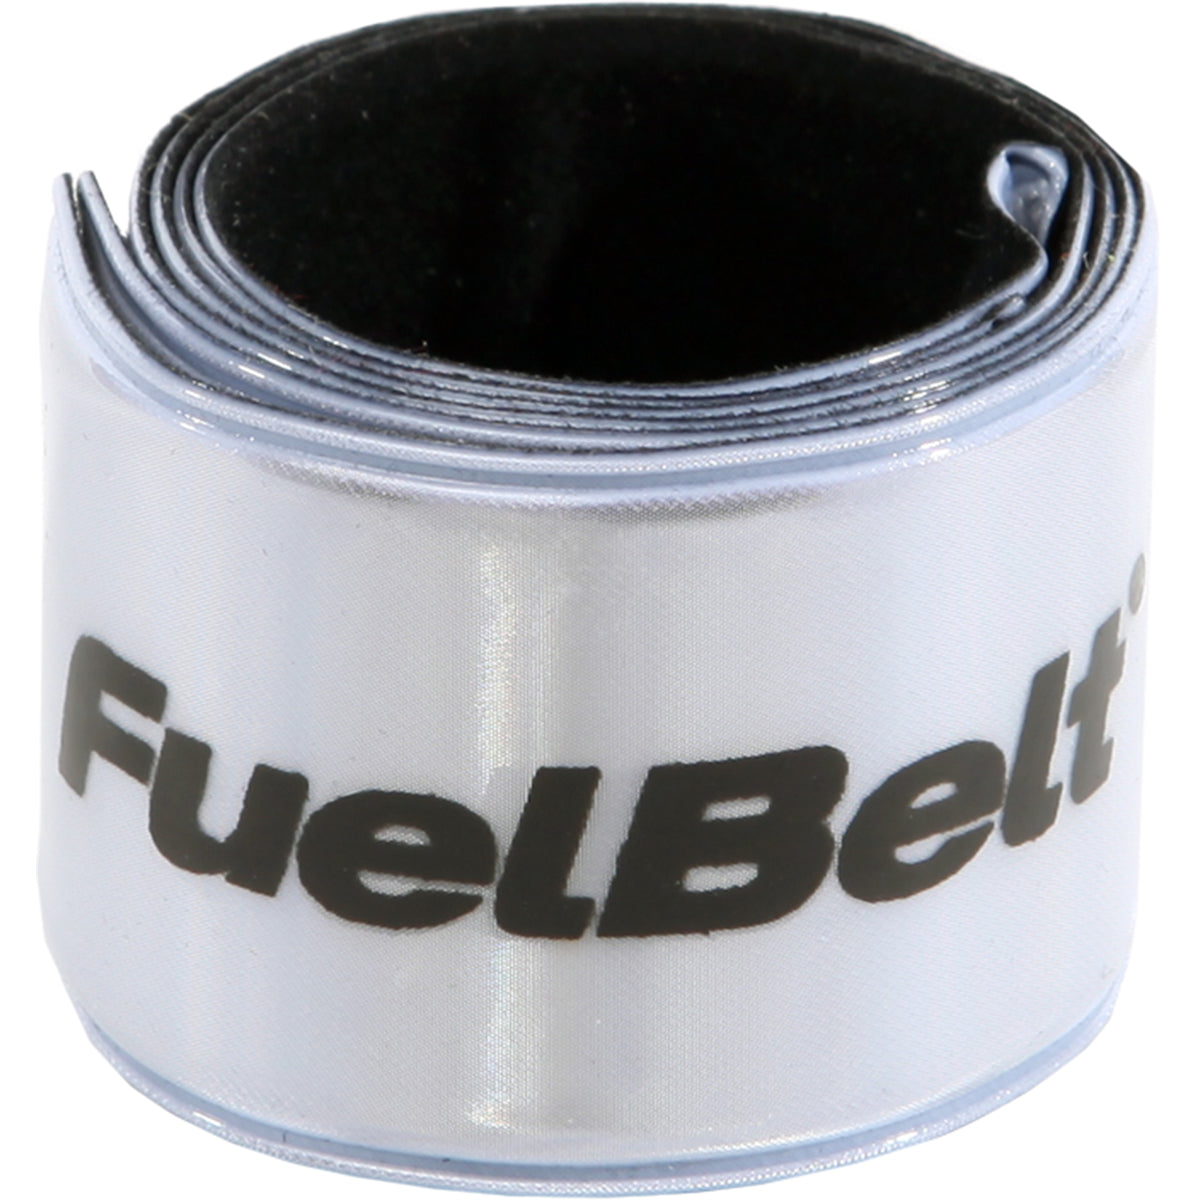 FuelBelt Reflective Snapbands 2 Pack - Silver FuelBelt